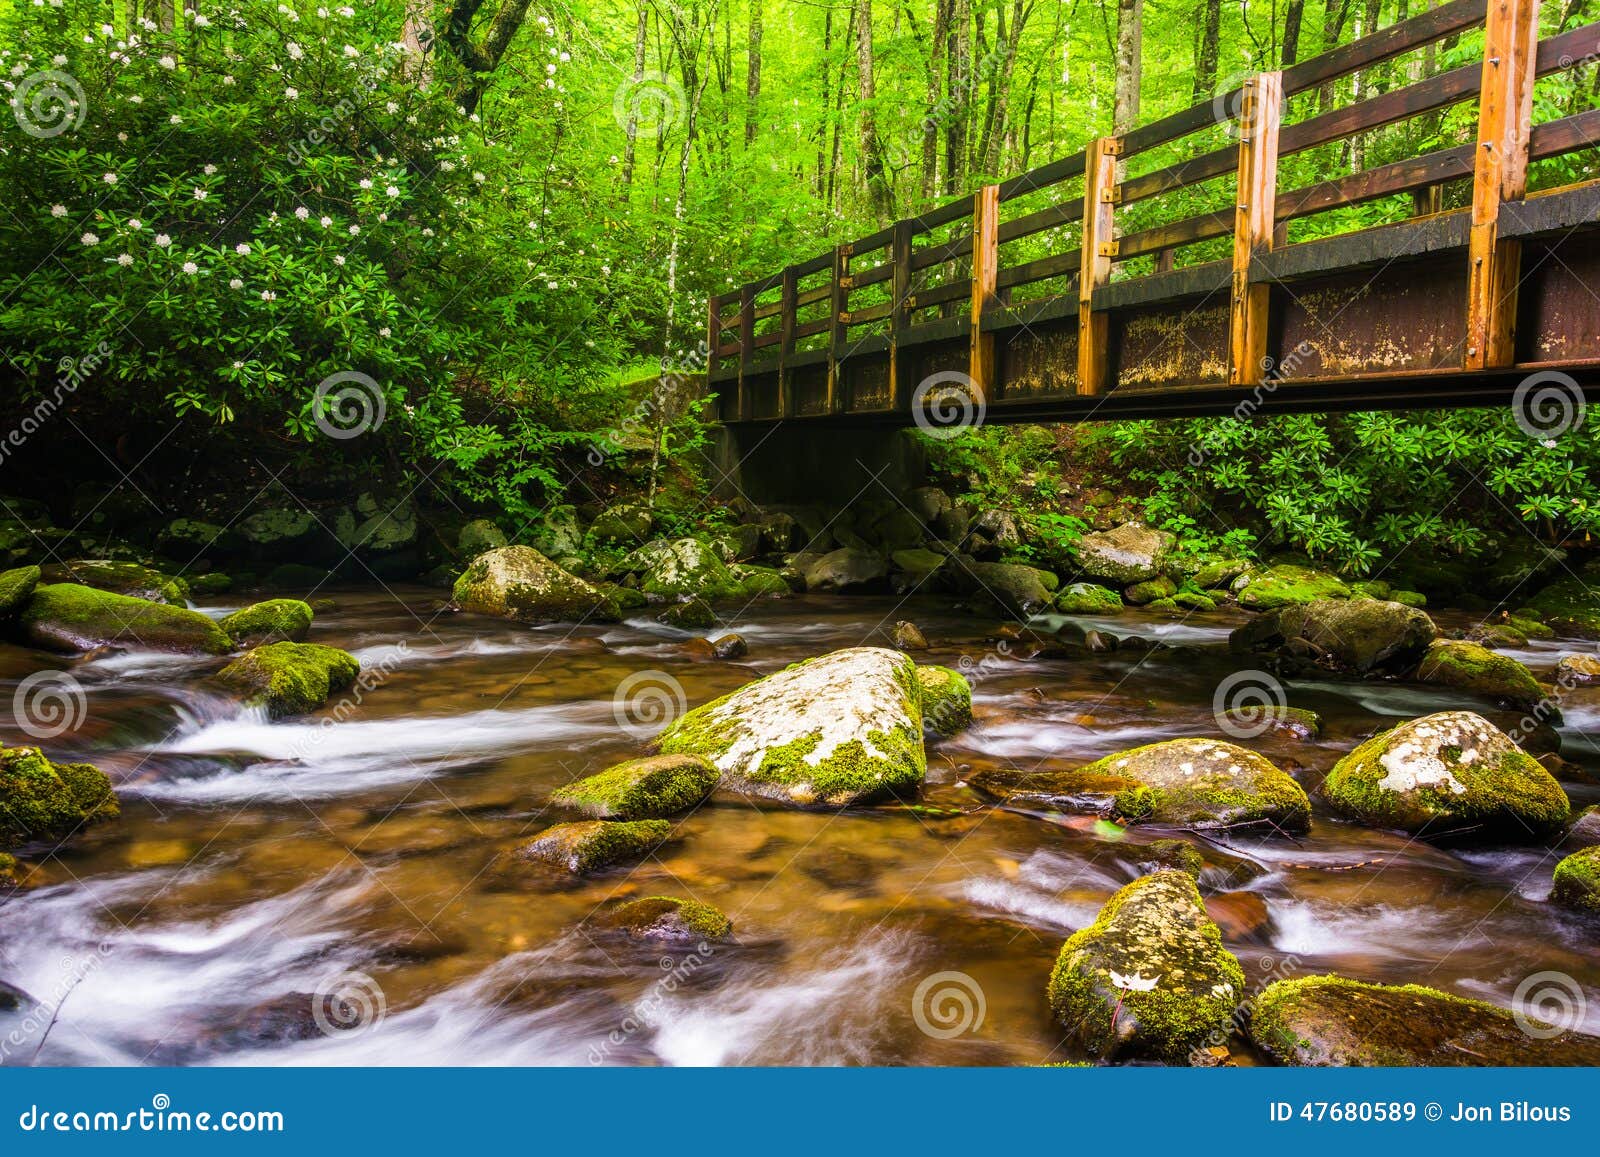 cascades and walking bridge over the oconaluftee river